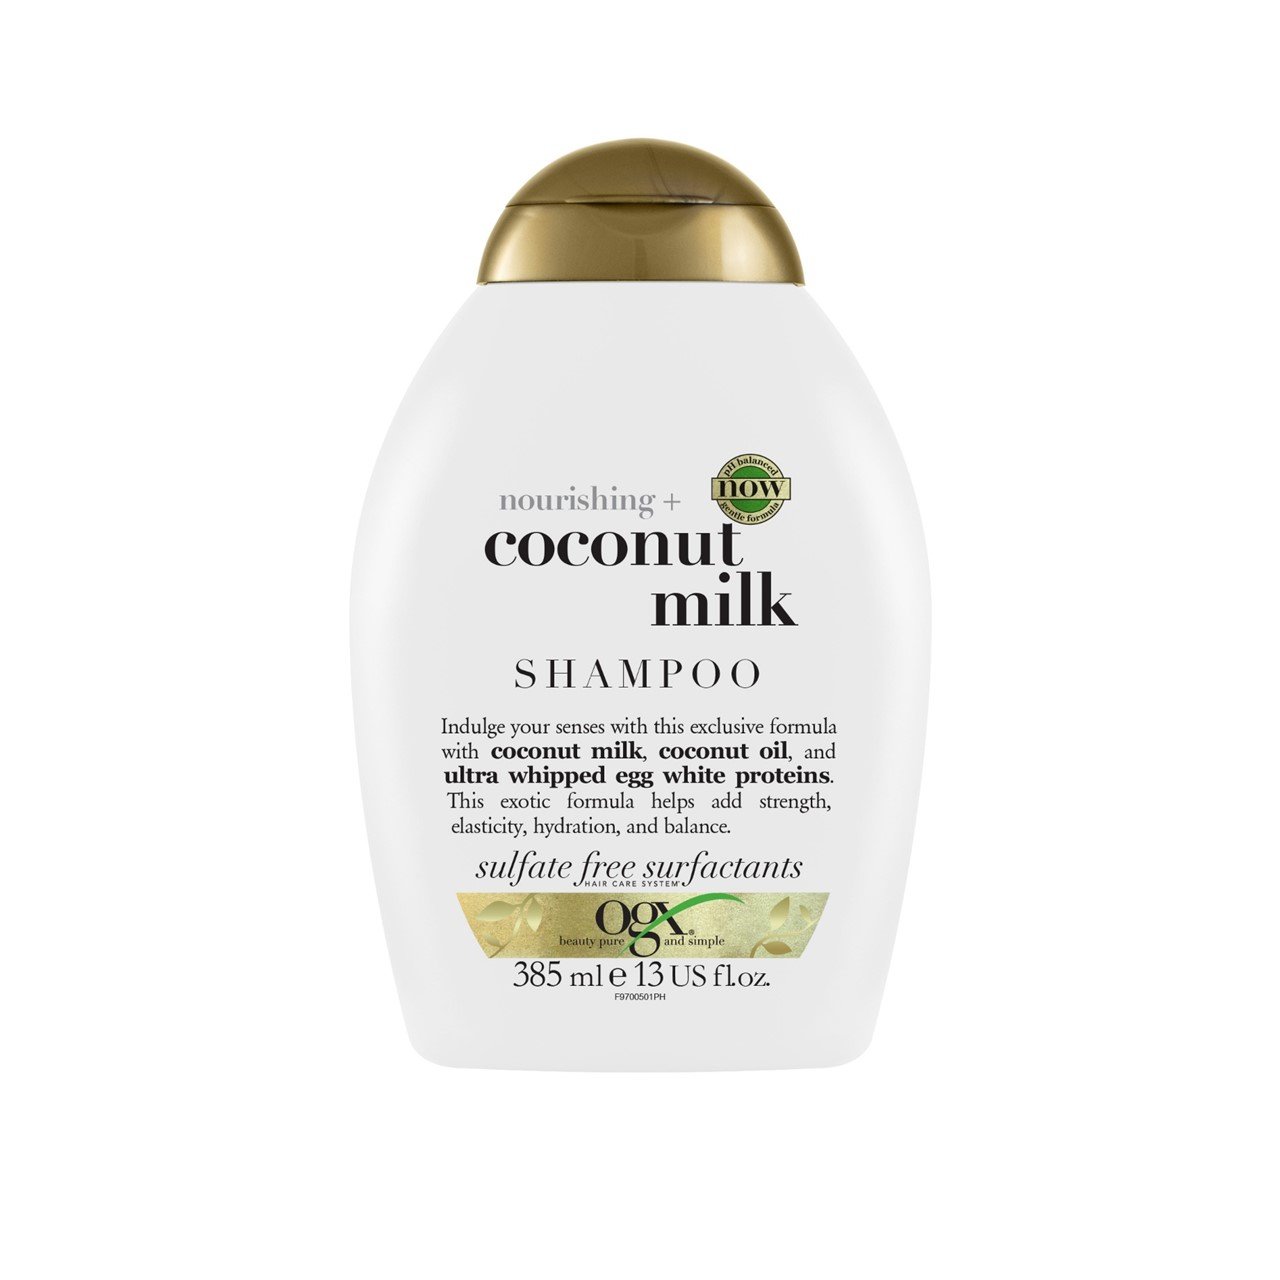 https://static.beautytocare.com/media/catalog/product/o/g/ogx-nourishing-coconut-milk-shampoo-385ml.jpg